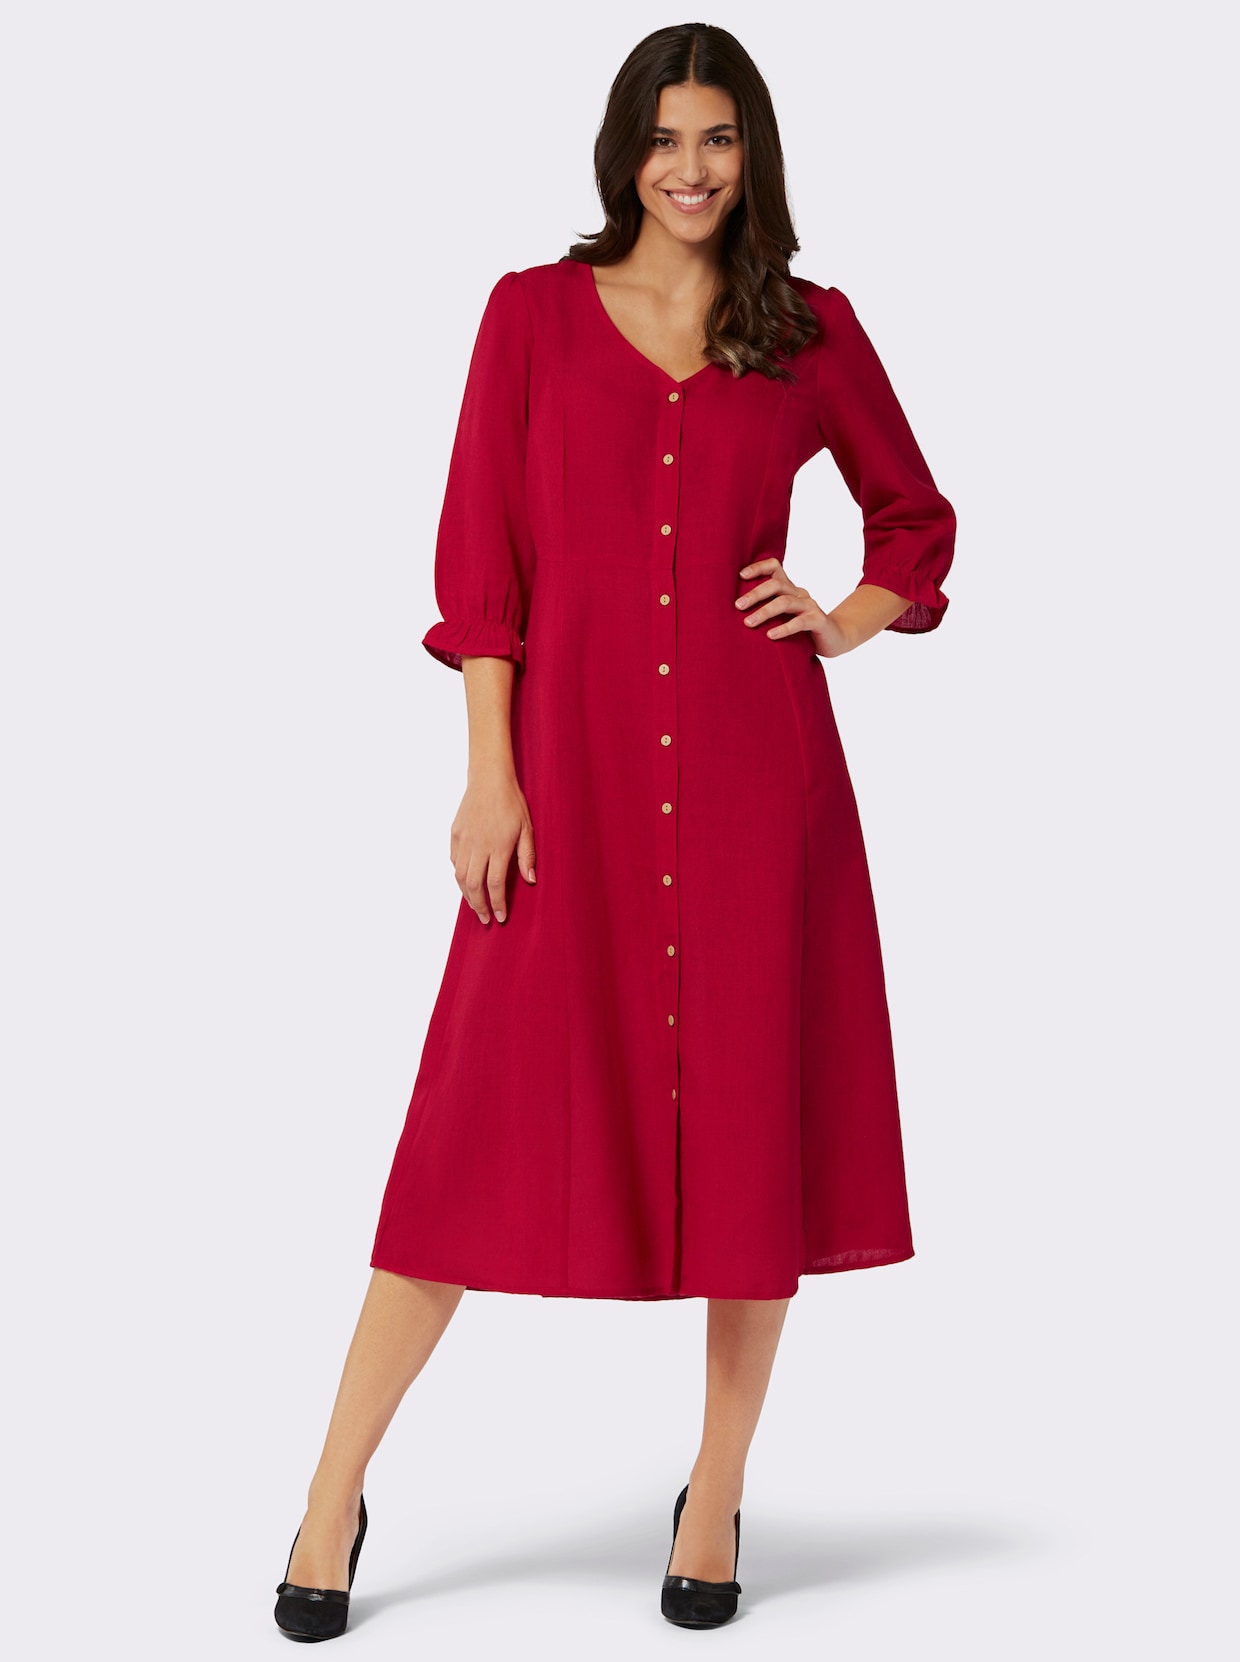 jurk in klederdrachtstijl - rood